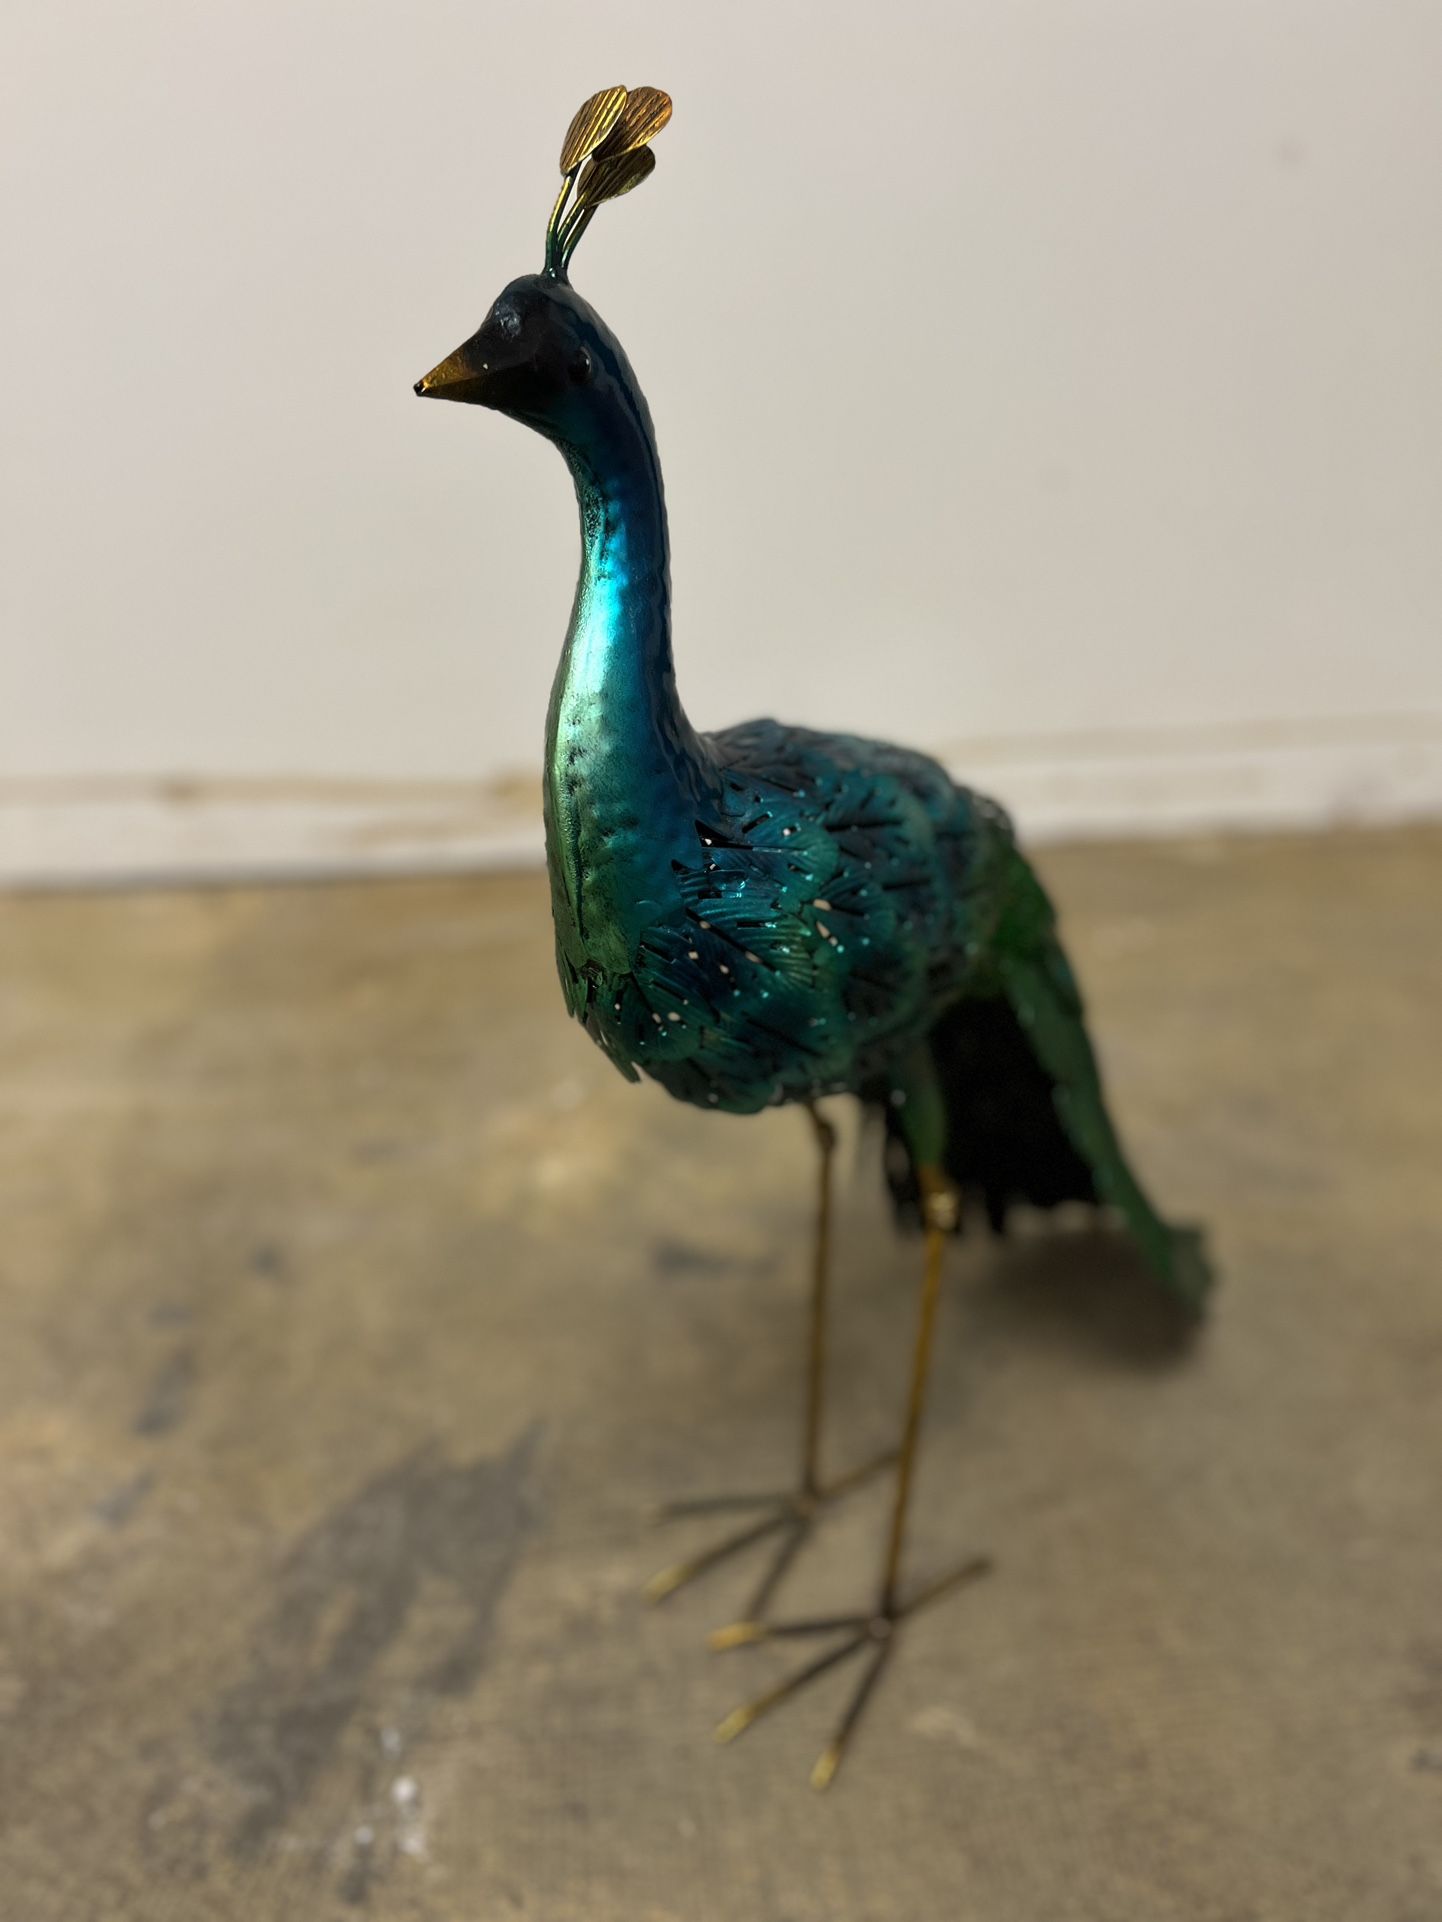 Peacock 25” Tall